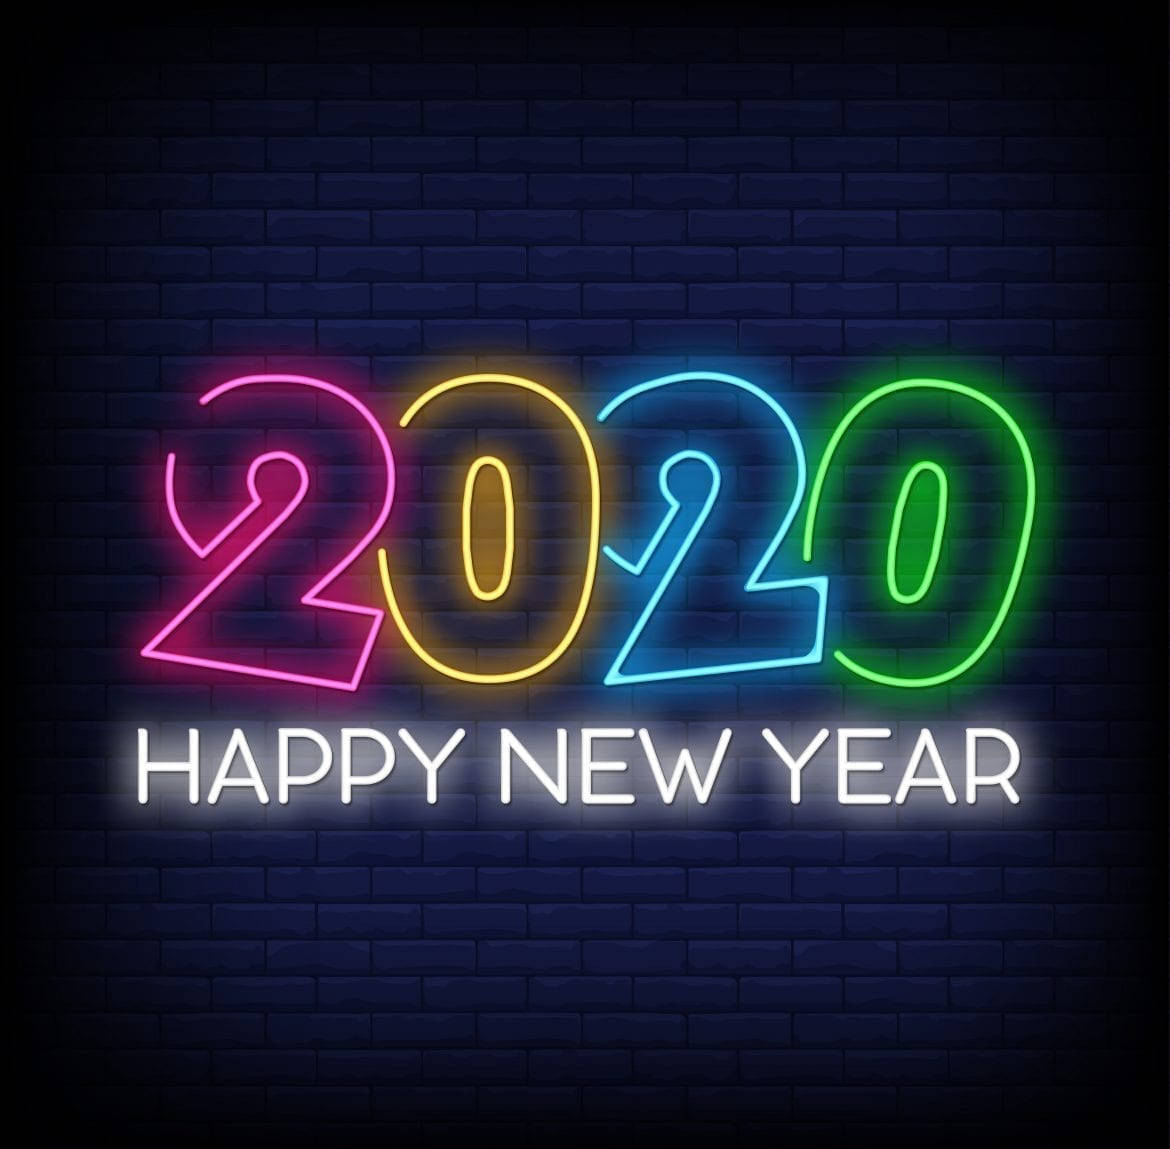 Happy New Year 2020 Wallpaper Image. Hd Wallpaper [2020] Wallpaper